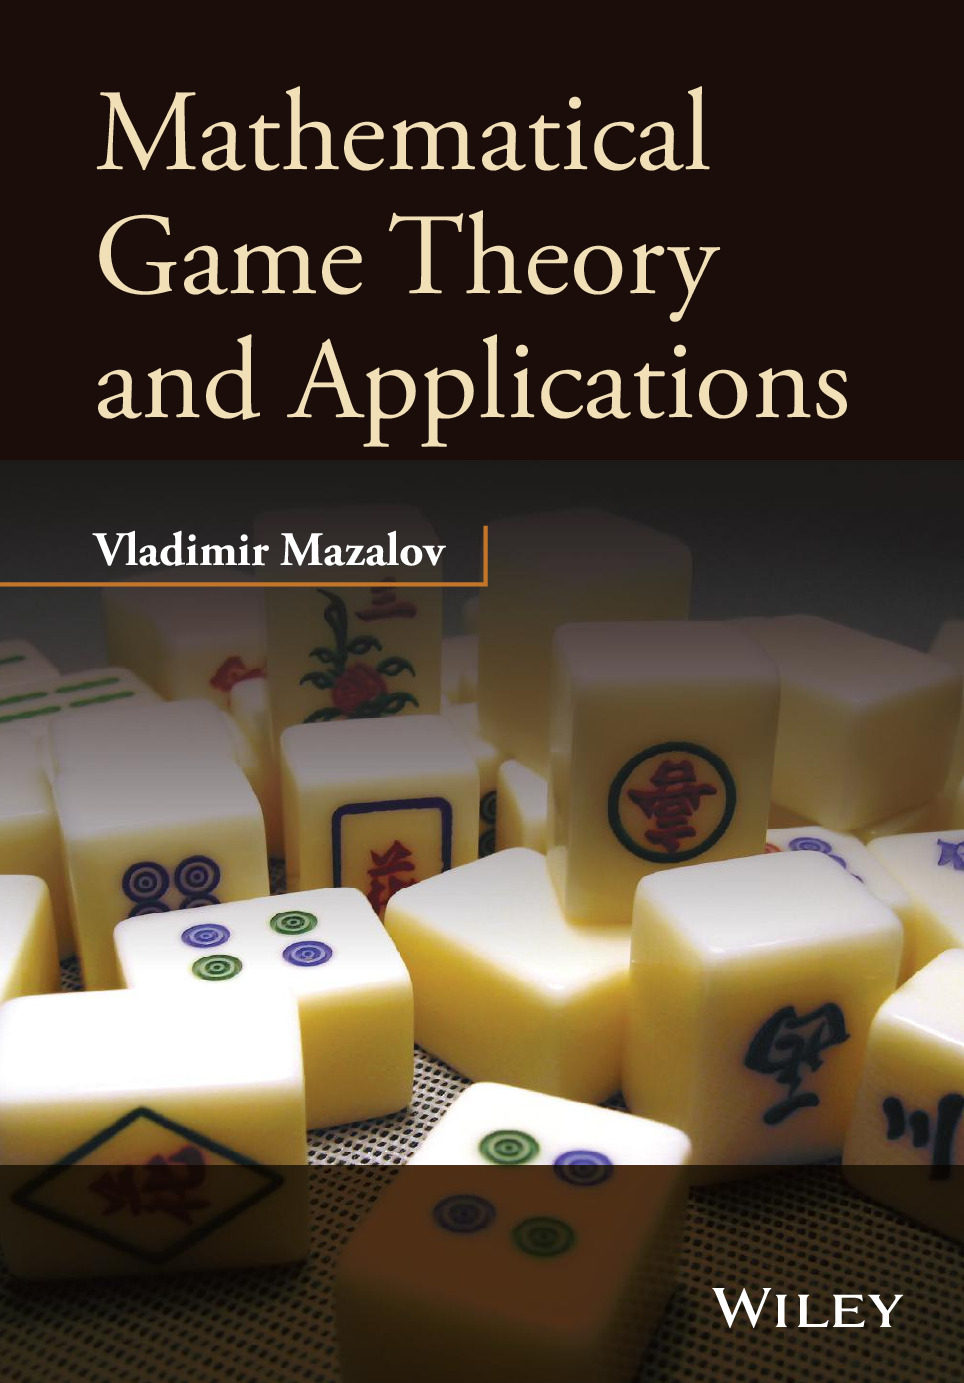 Mathematical Game Theory and Applications – Vladimir Mazalov